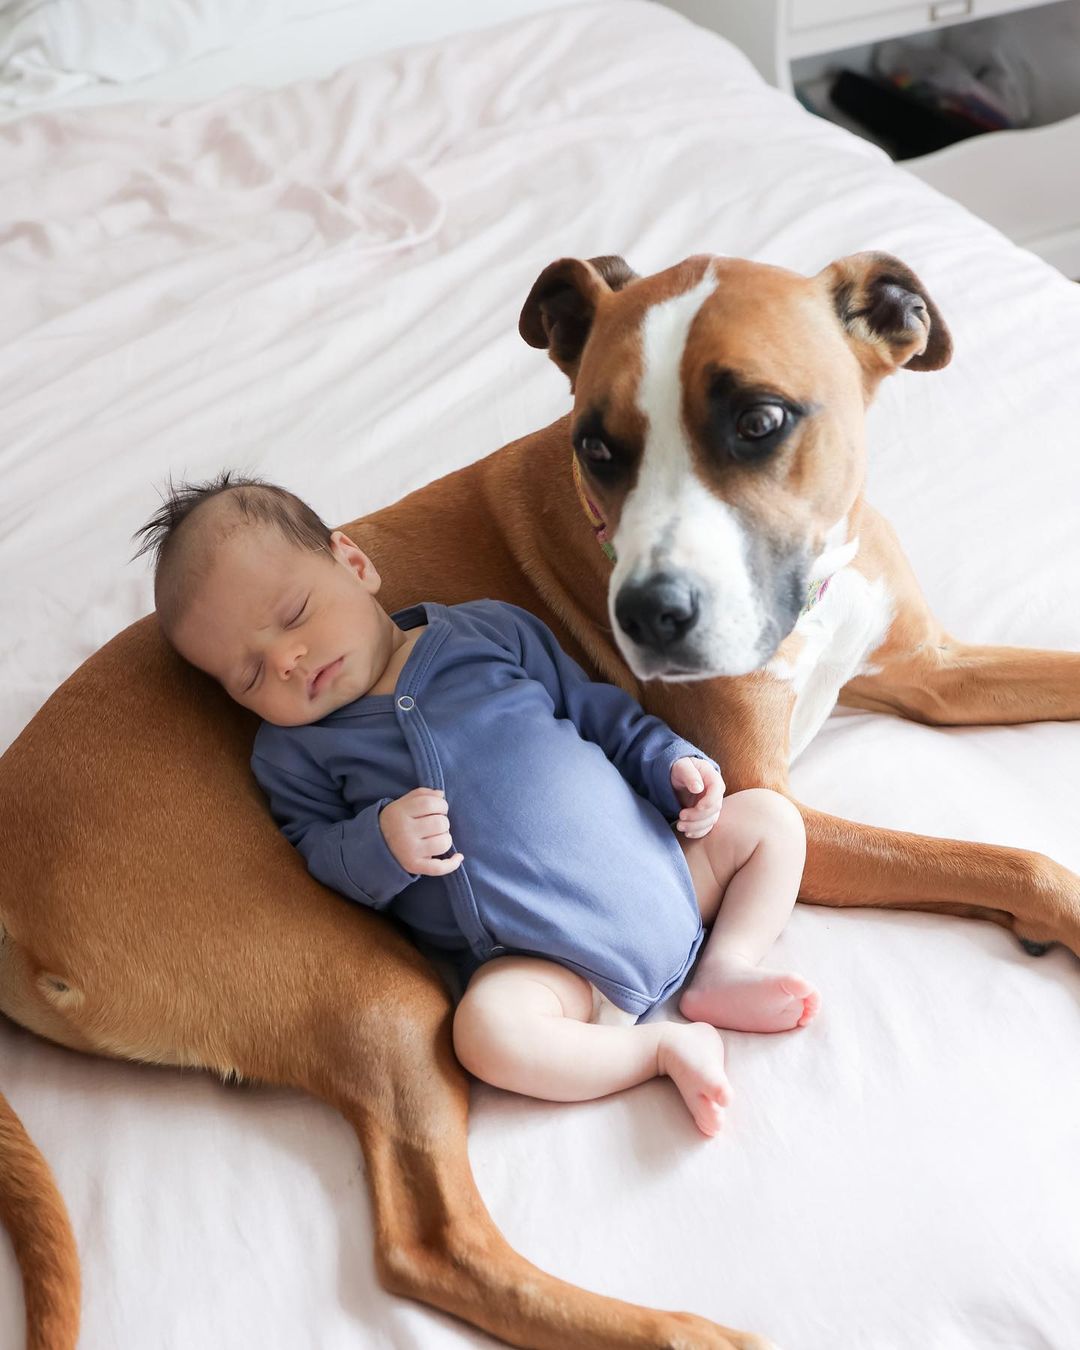 newborn baby lying on dog